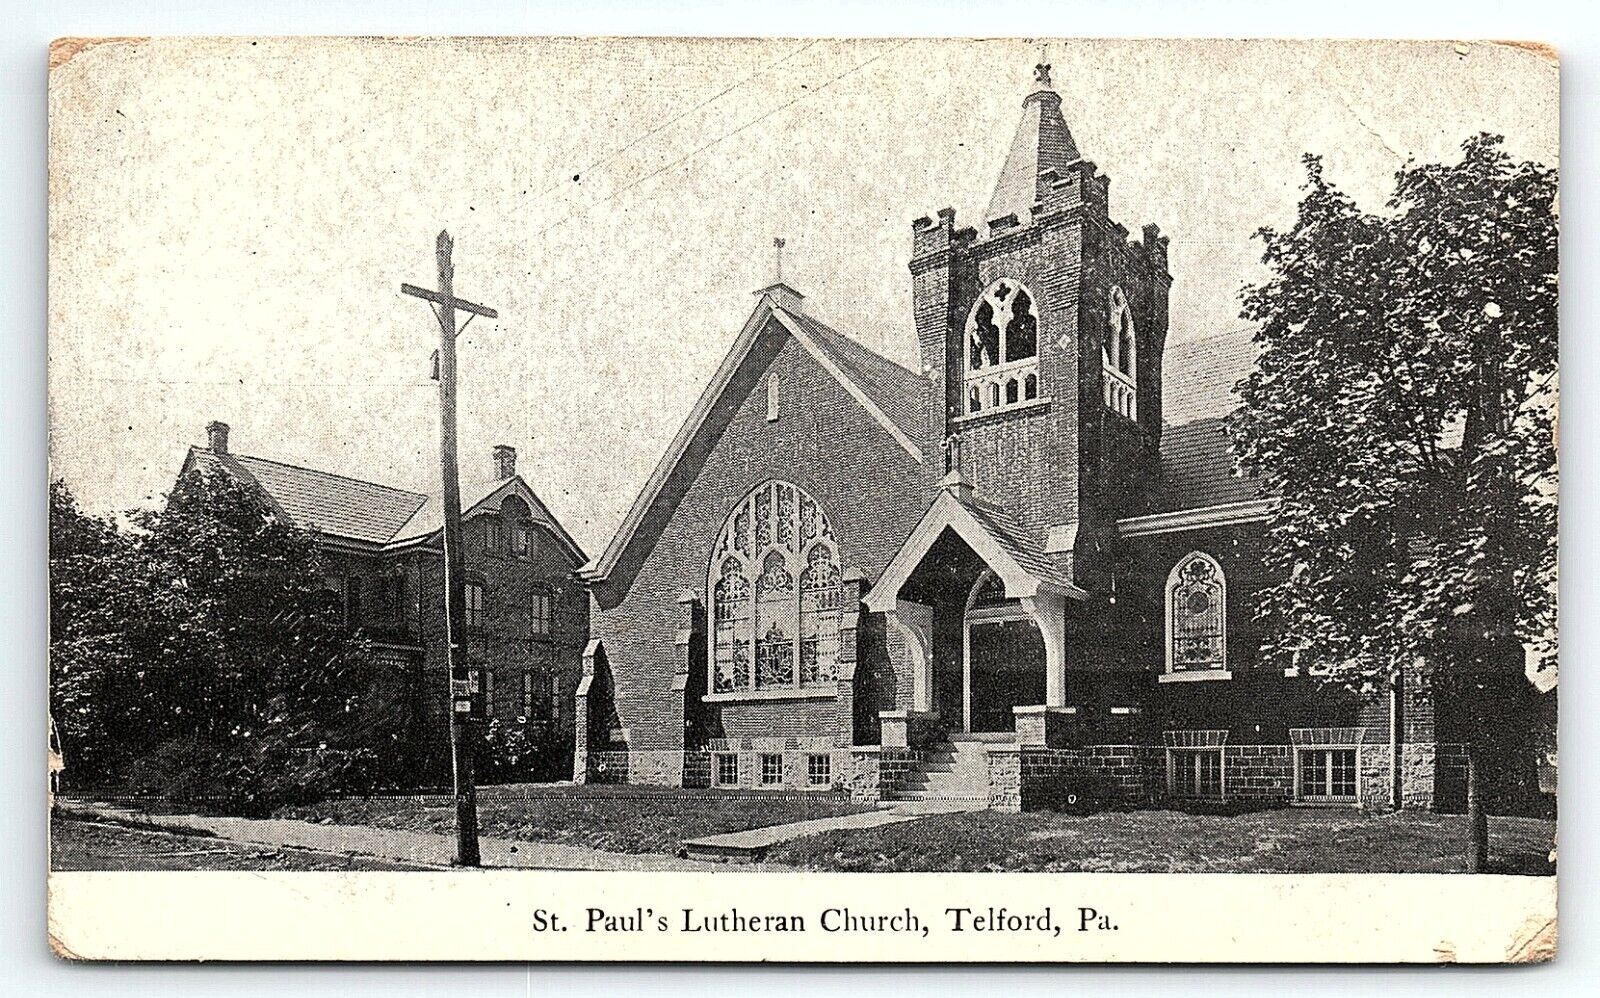 c1910 TELFORD PA ST. PAUL'S LUTHERAN CHURCH STREET VIEW EARLY POSTCARD P3985